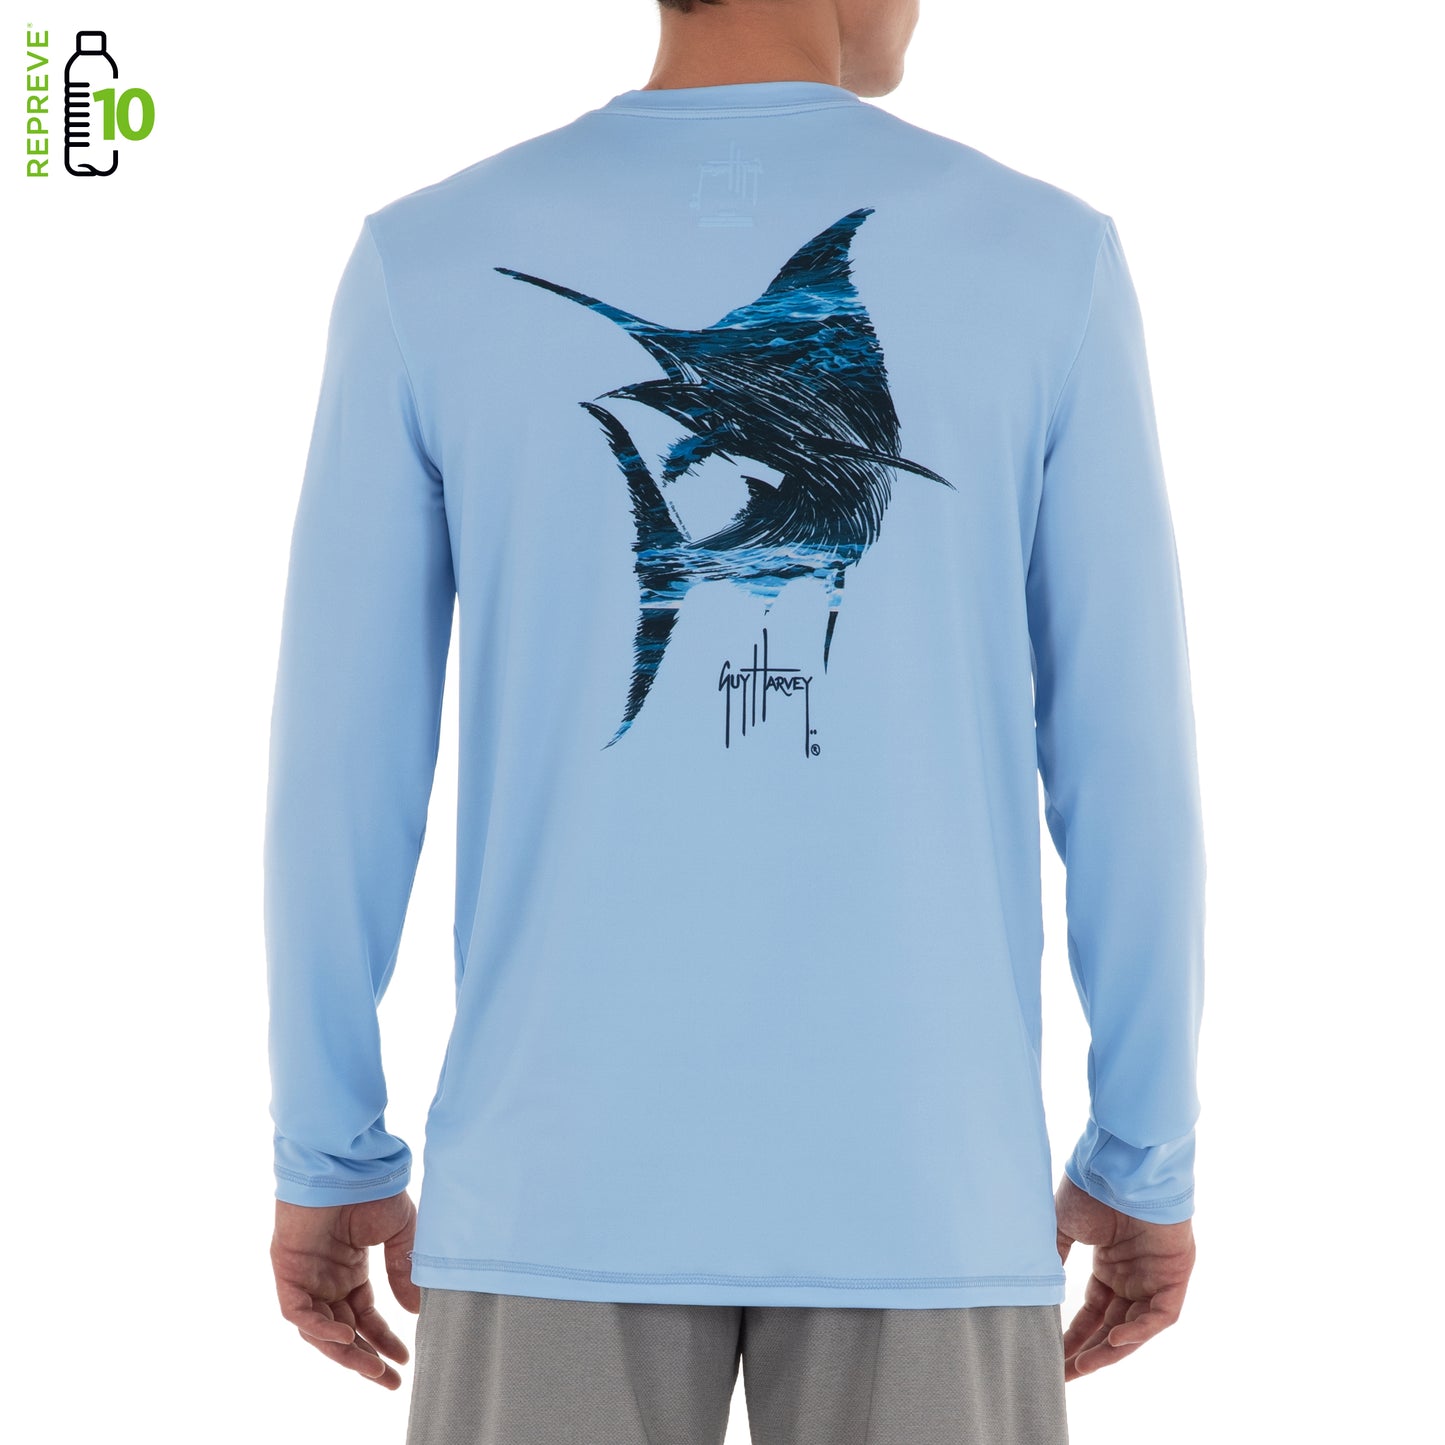 Men's Scribble Marlin Performance Fishing Shirt – Guy Harvey